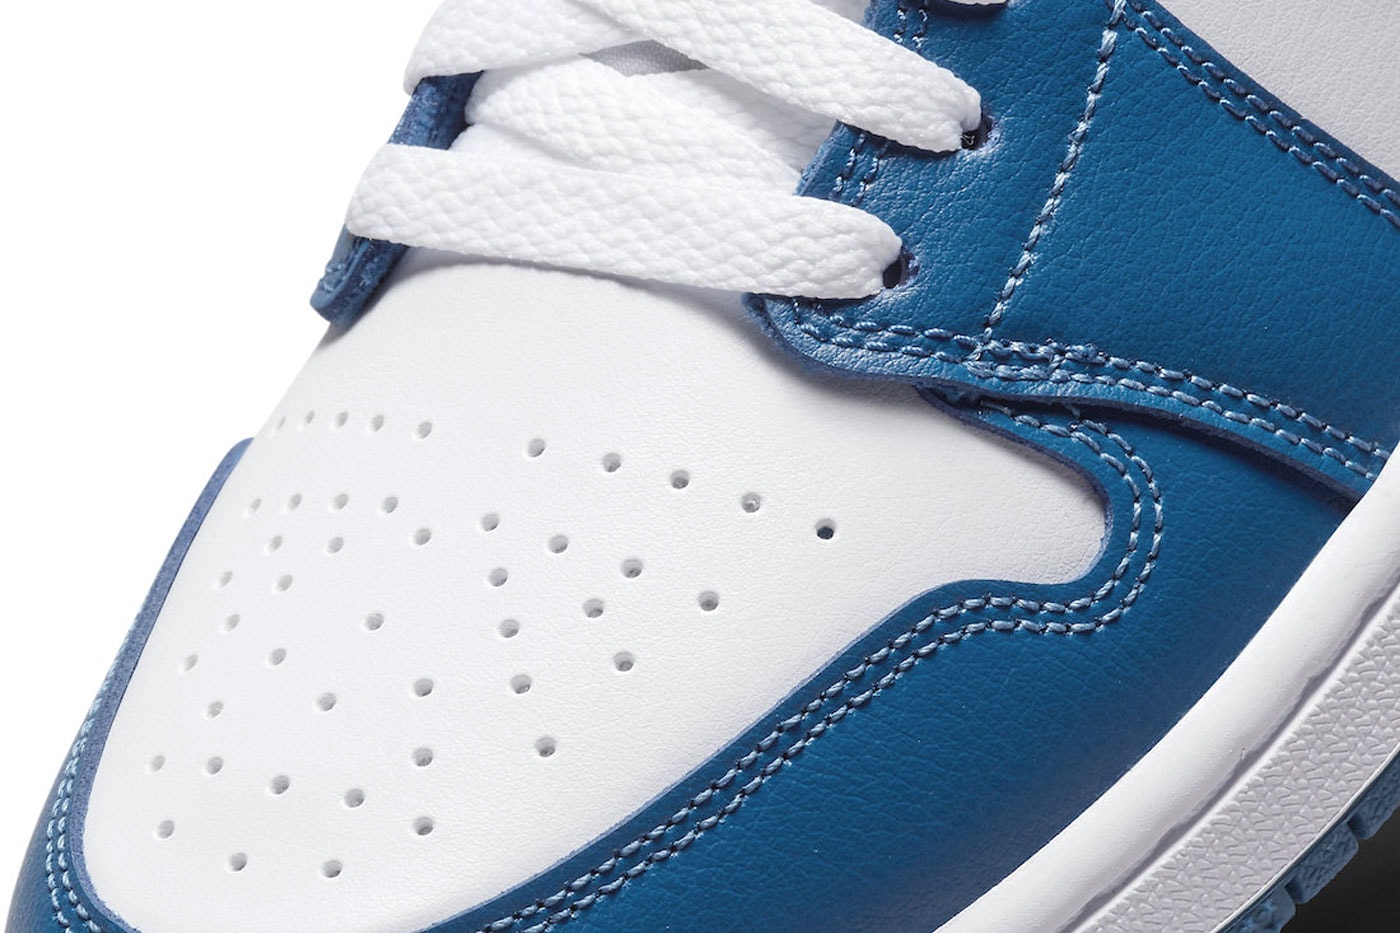 Nike Air Jordan 1 Low AJ1 Marina Blue Details